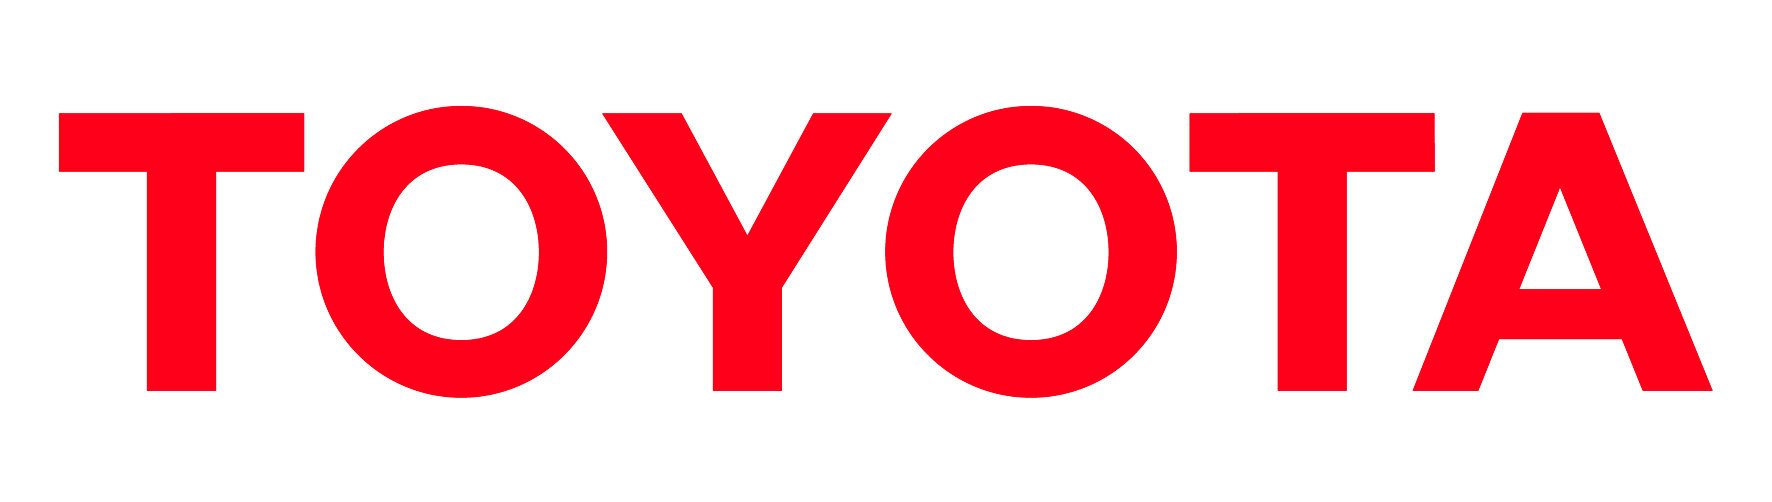 Toyota_corporate+logo.jpg